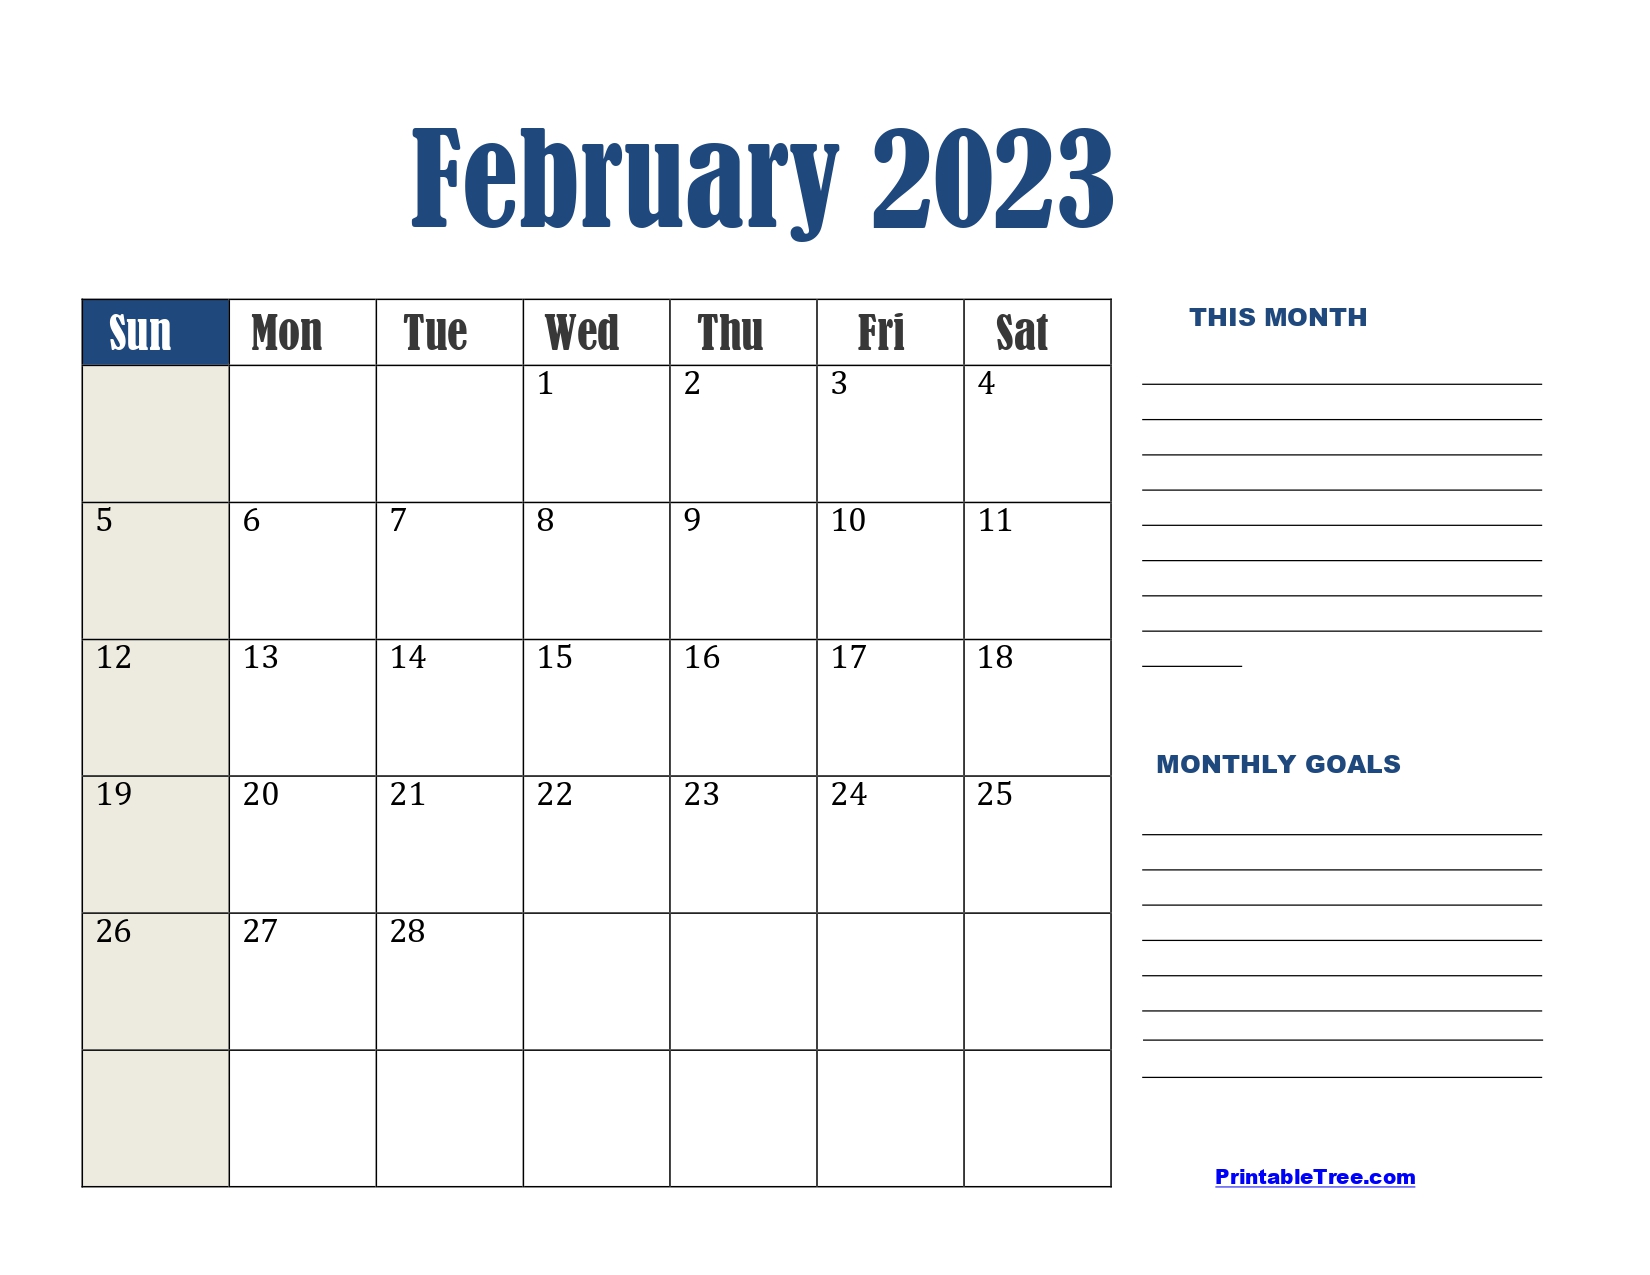 Landscape Blue February 2023 Calendar with Goals